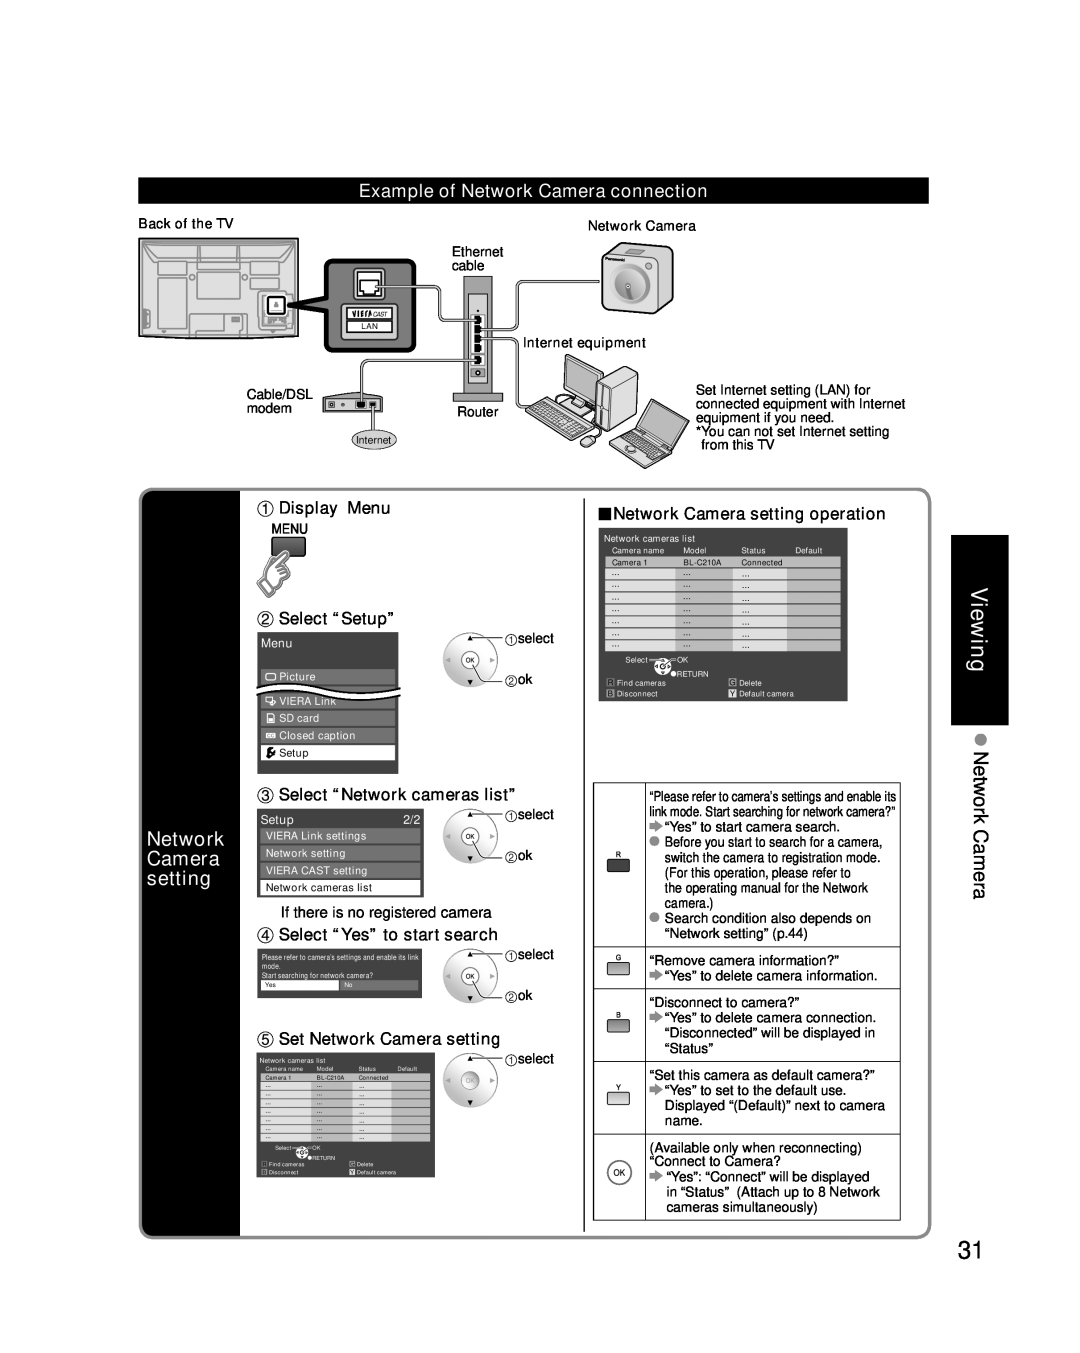 Panasonic TC-P46G10 setting, Example of Network Camera connection, Display Menu Select “Setup”, Viewing 